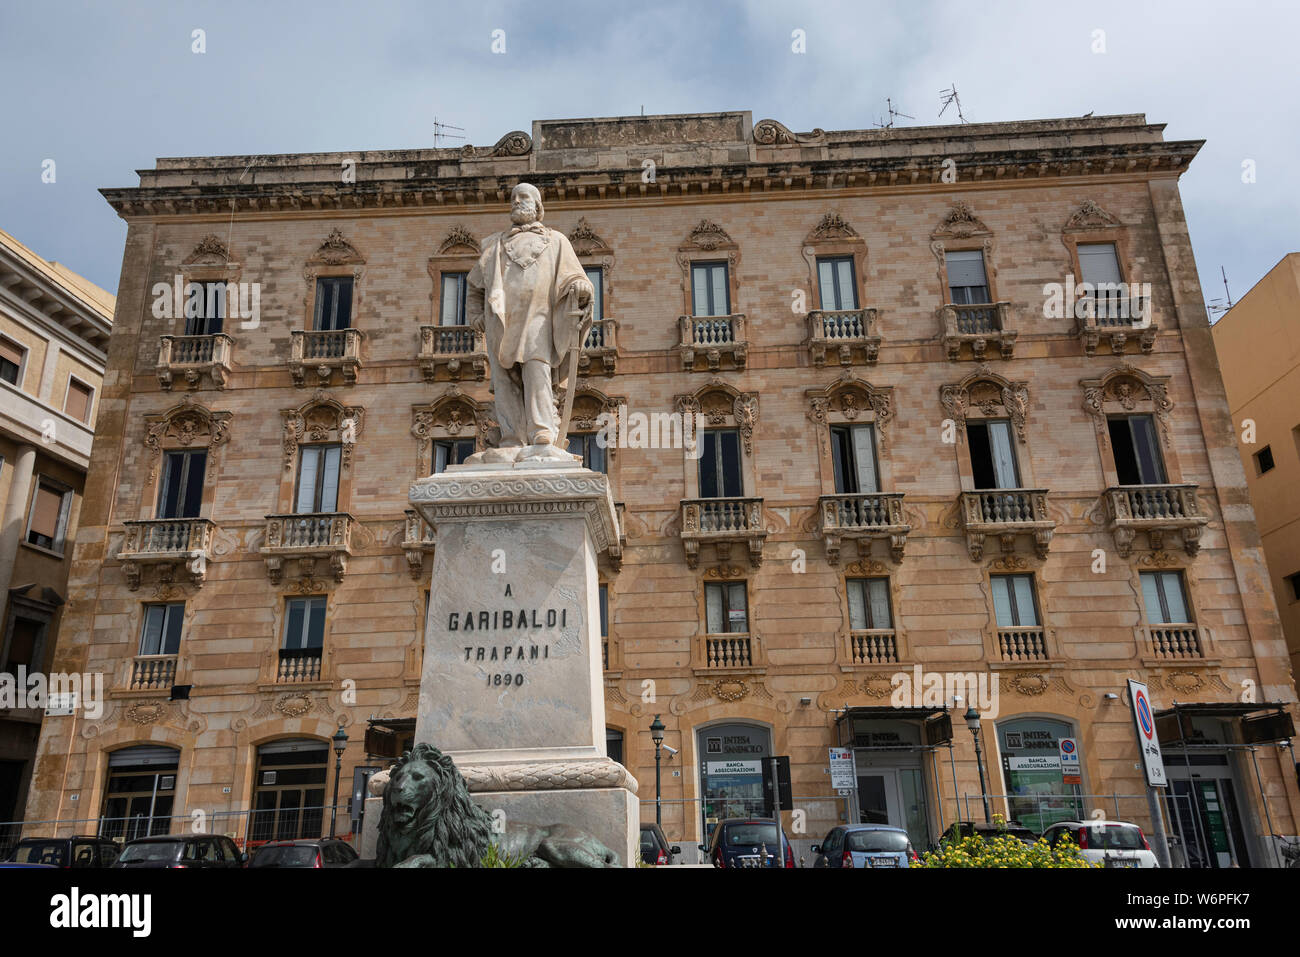 Statue of Giuseppe Garibaldi near the port of Trapani, Sicily Stock Photo